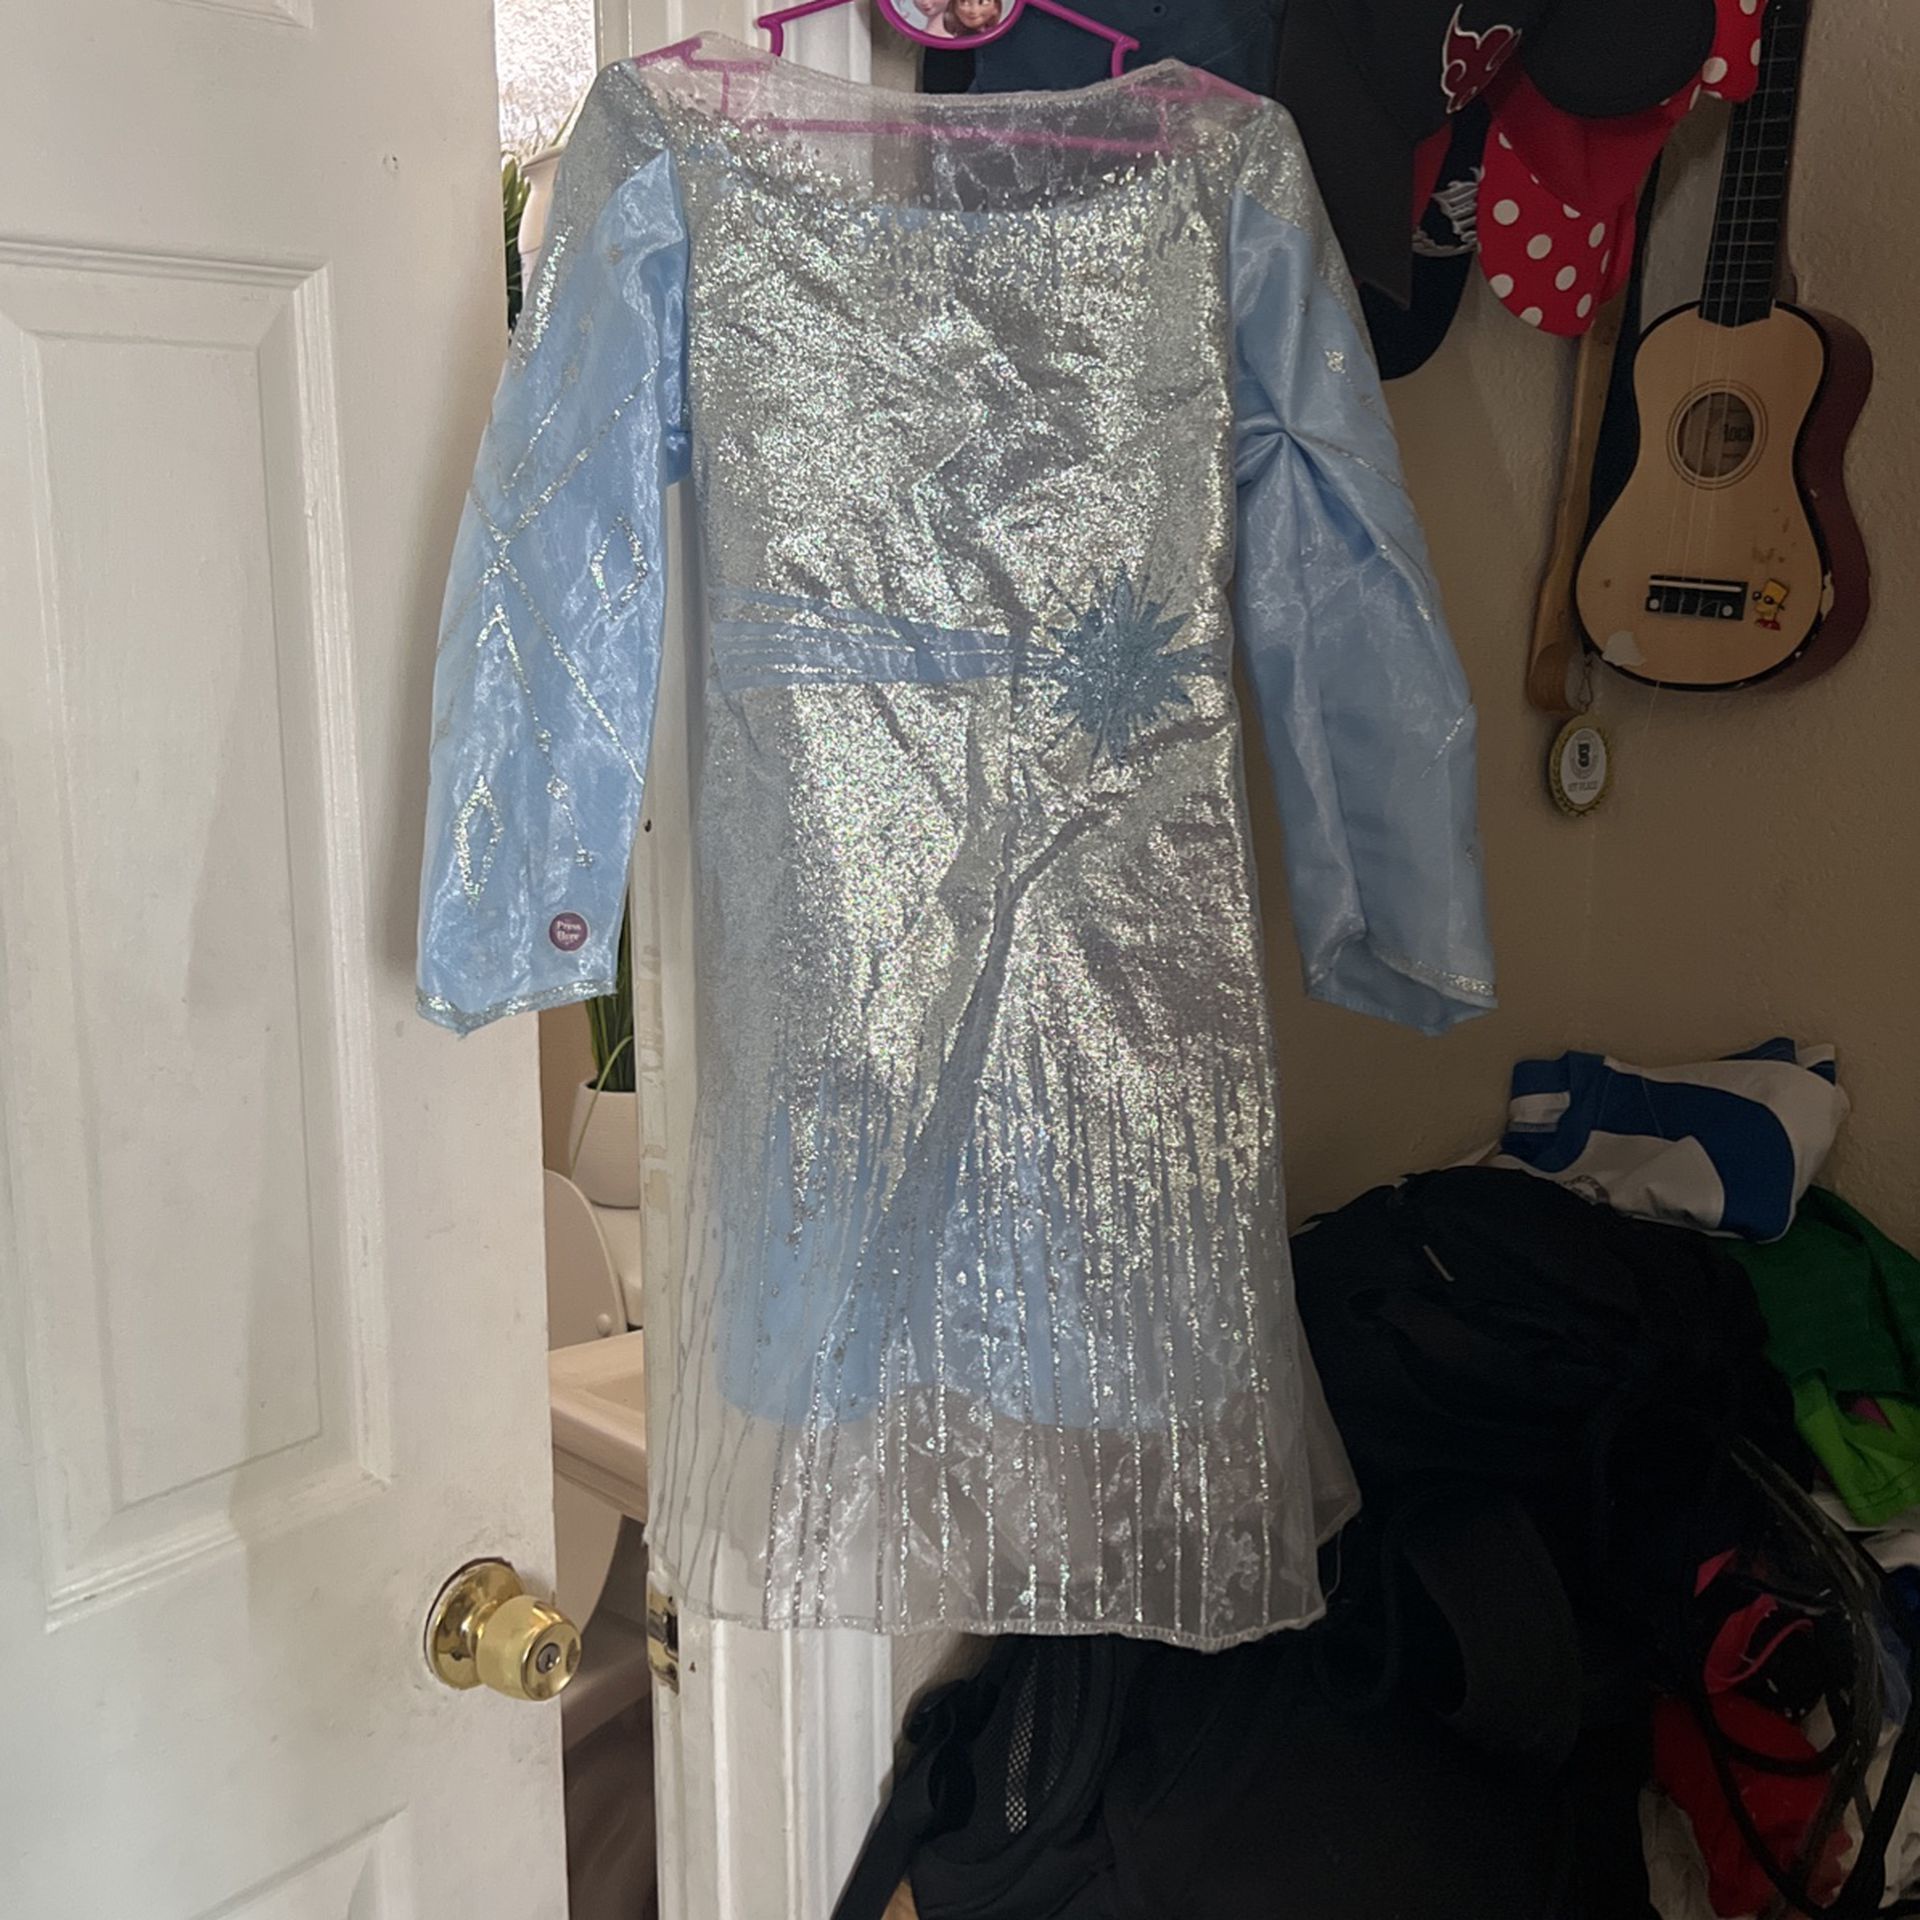 Elsa Dress Costume Size 4-6k Only $10